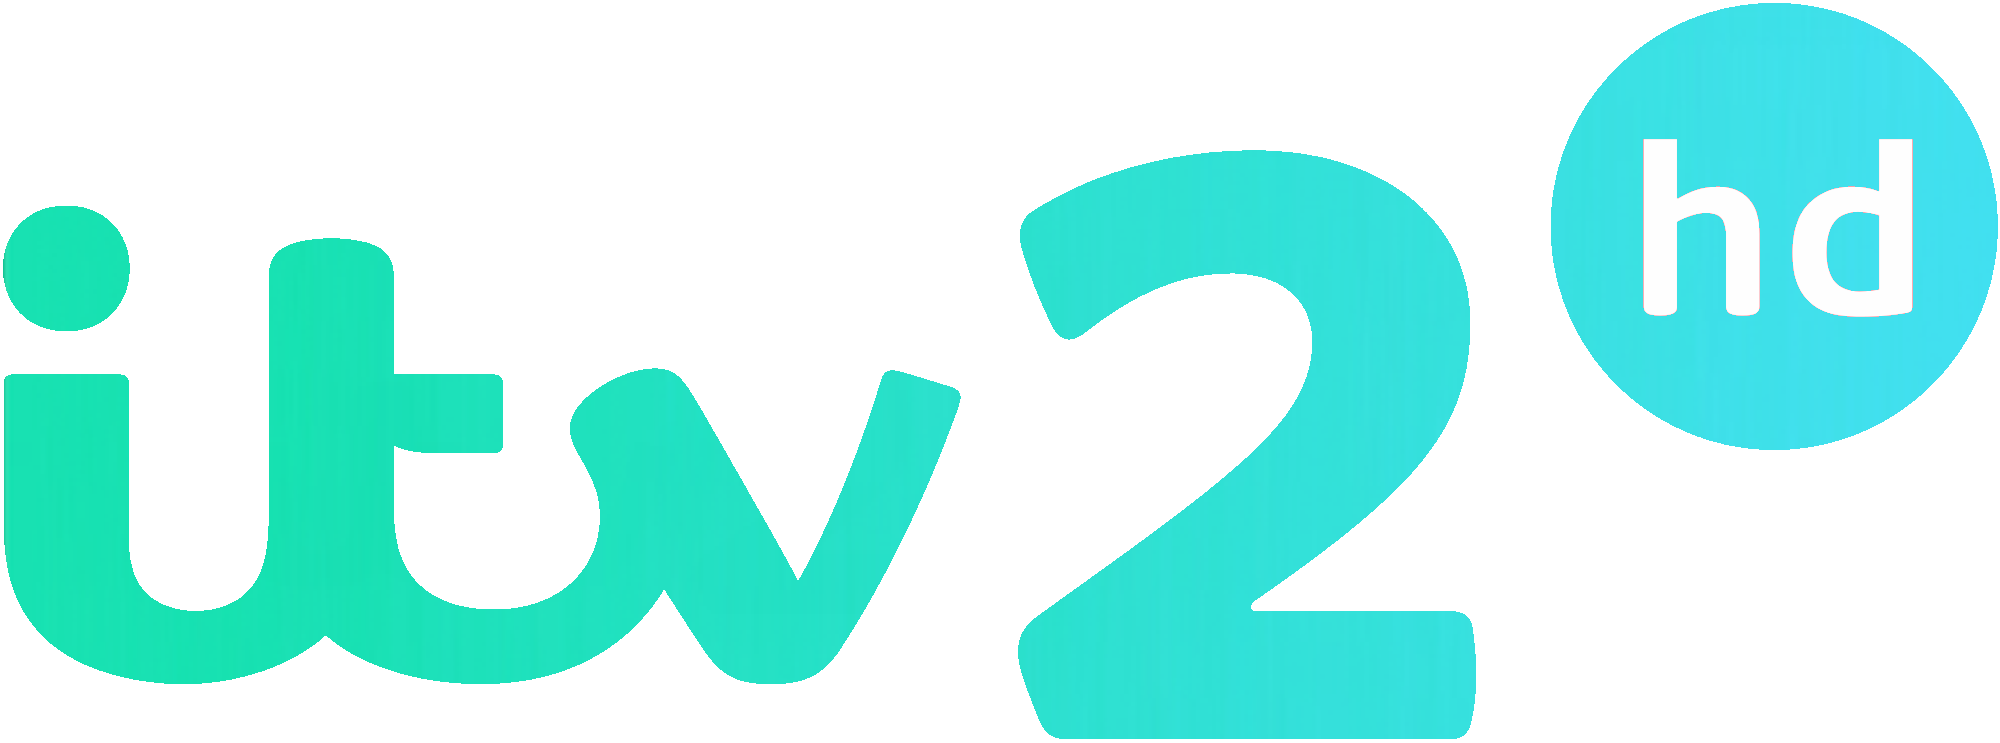 ITV2 HD logo 2013 svg.png - I